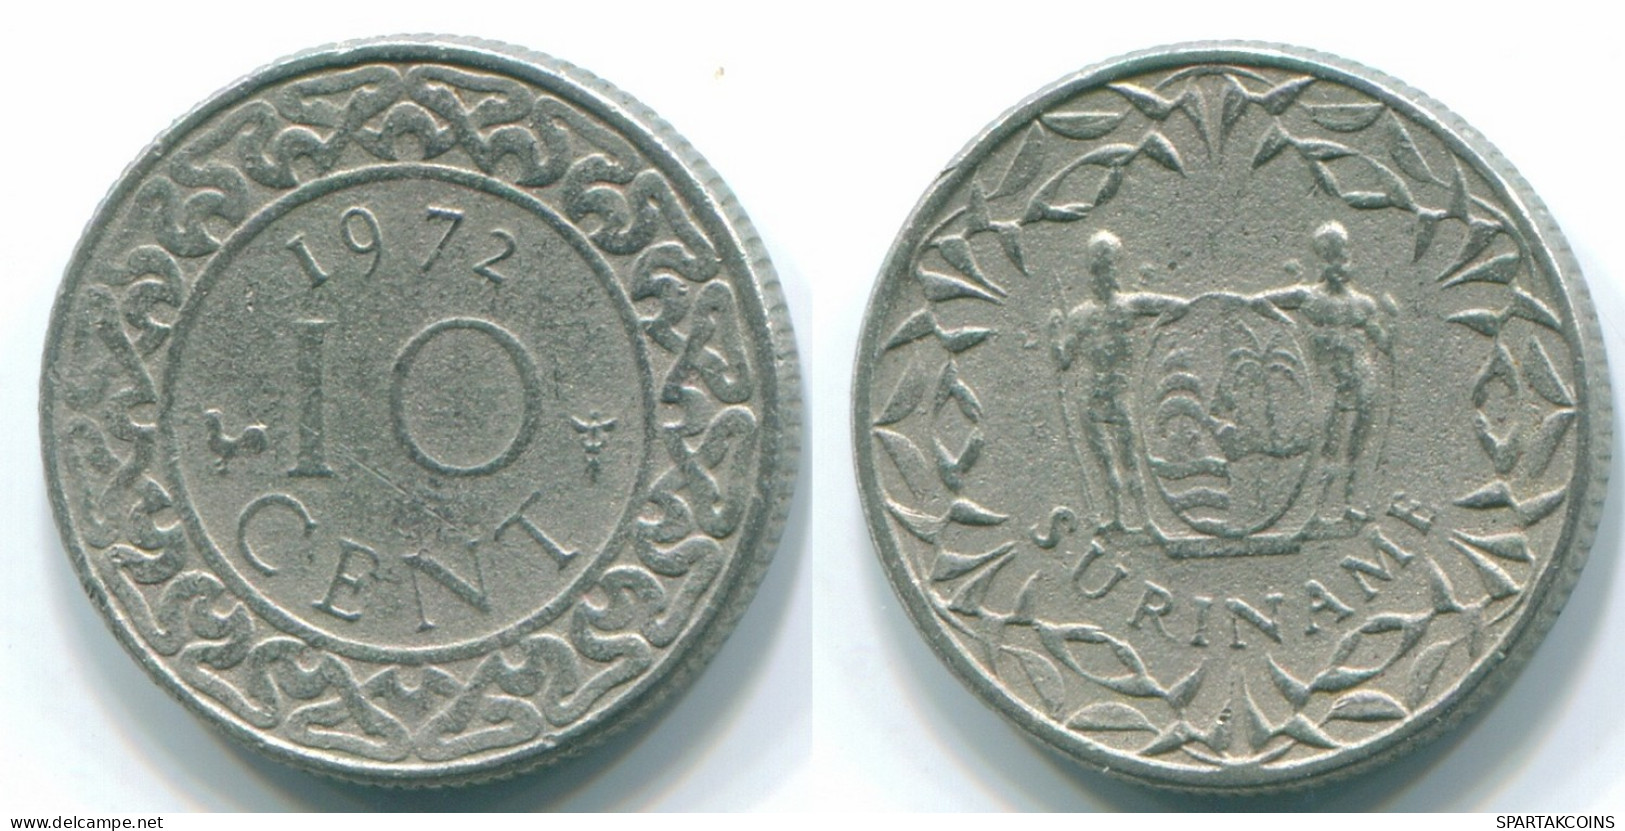 10 CENTS 1972 SURINAME Netherlands Nickel Colonial Coin #S13271.U.A - Surinam 1975 - ...